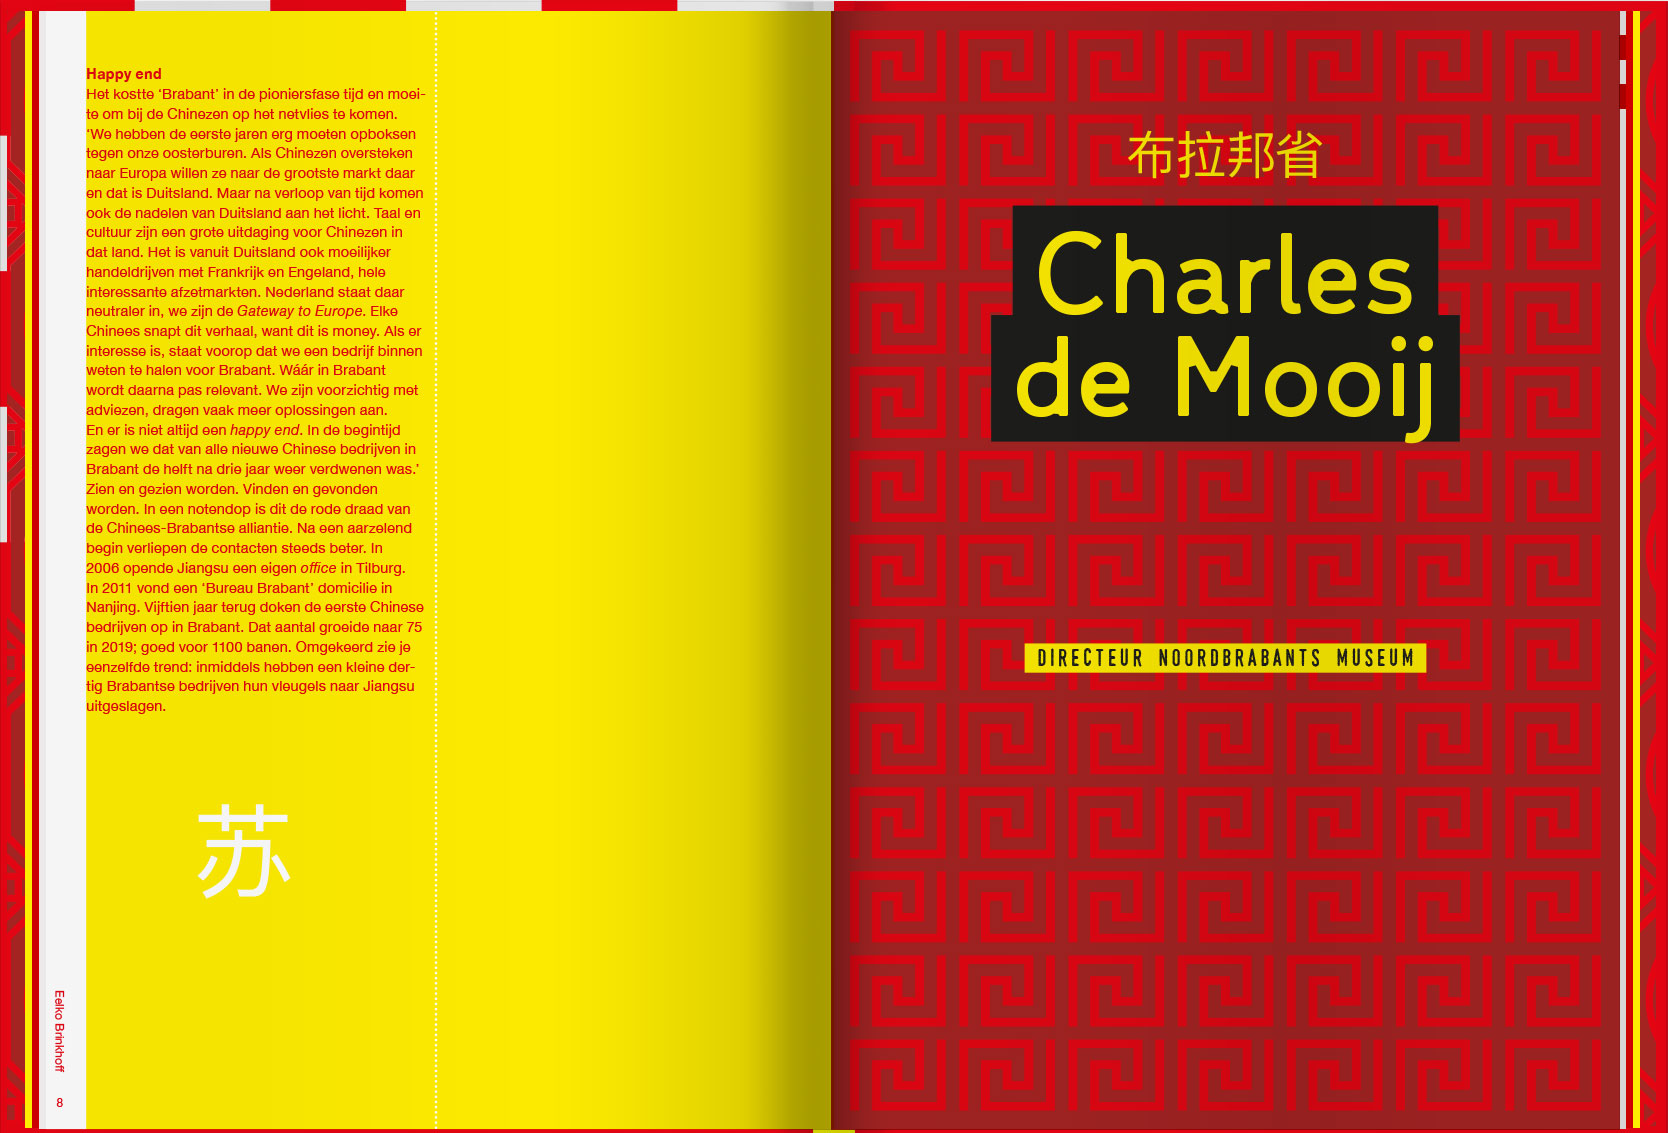 Boek Brabant - China (Jiangsu) met Charles de Mooij